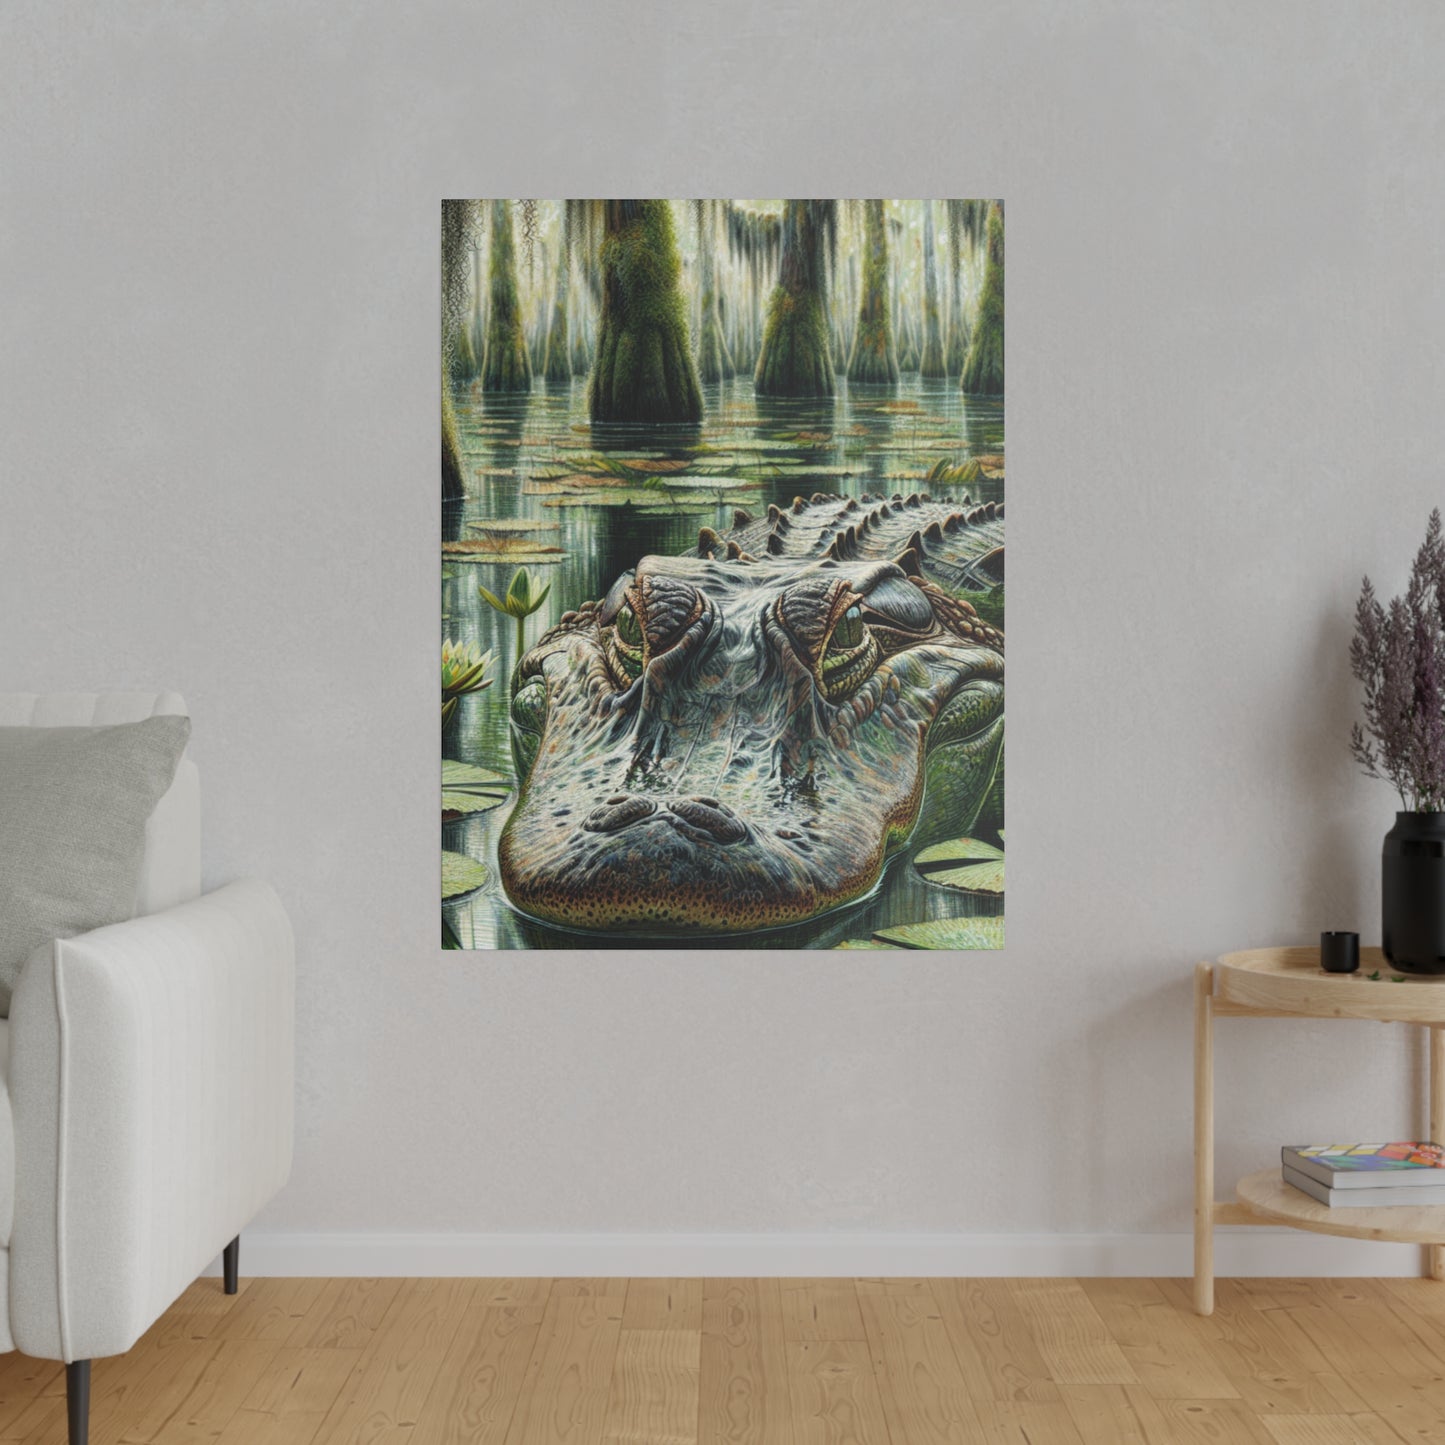 "Alligator Majesty: Exotic Canvas Wall Art"